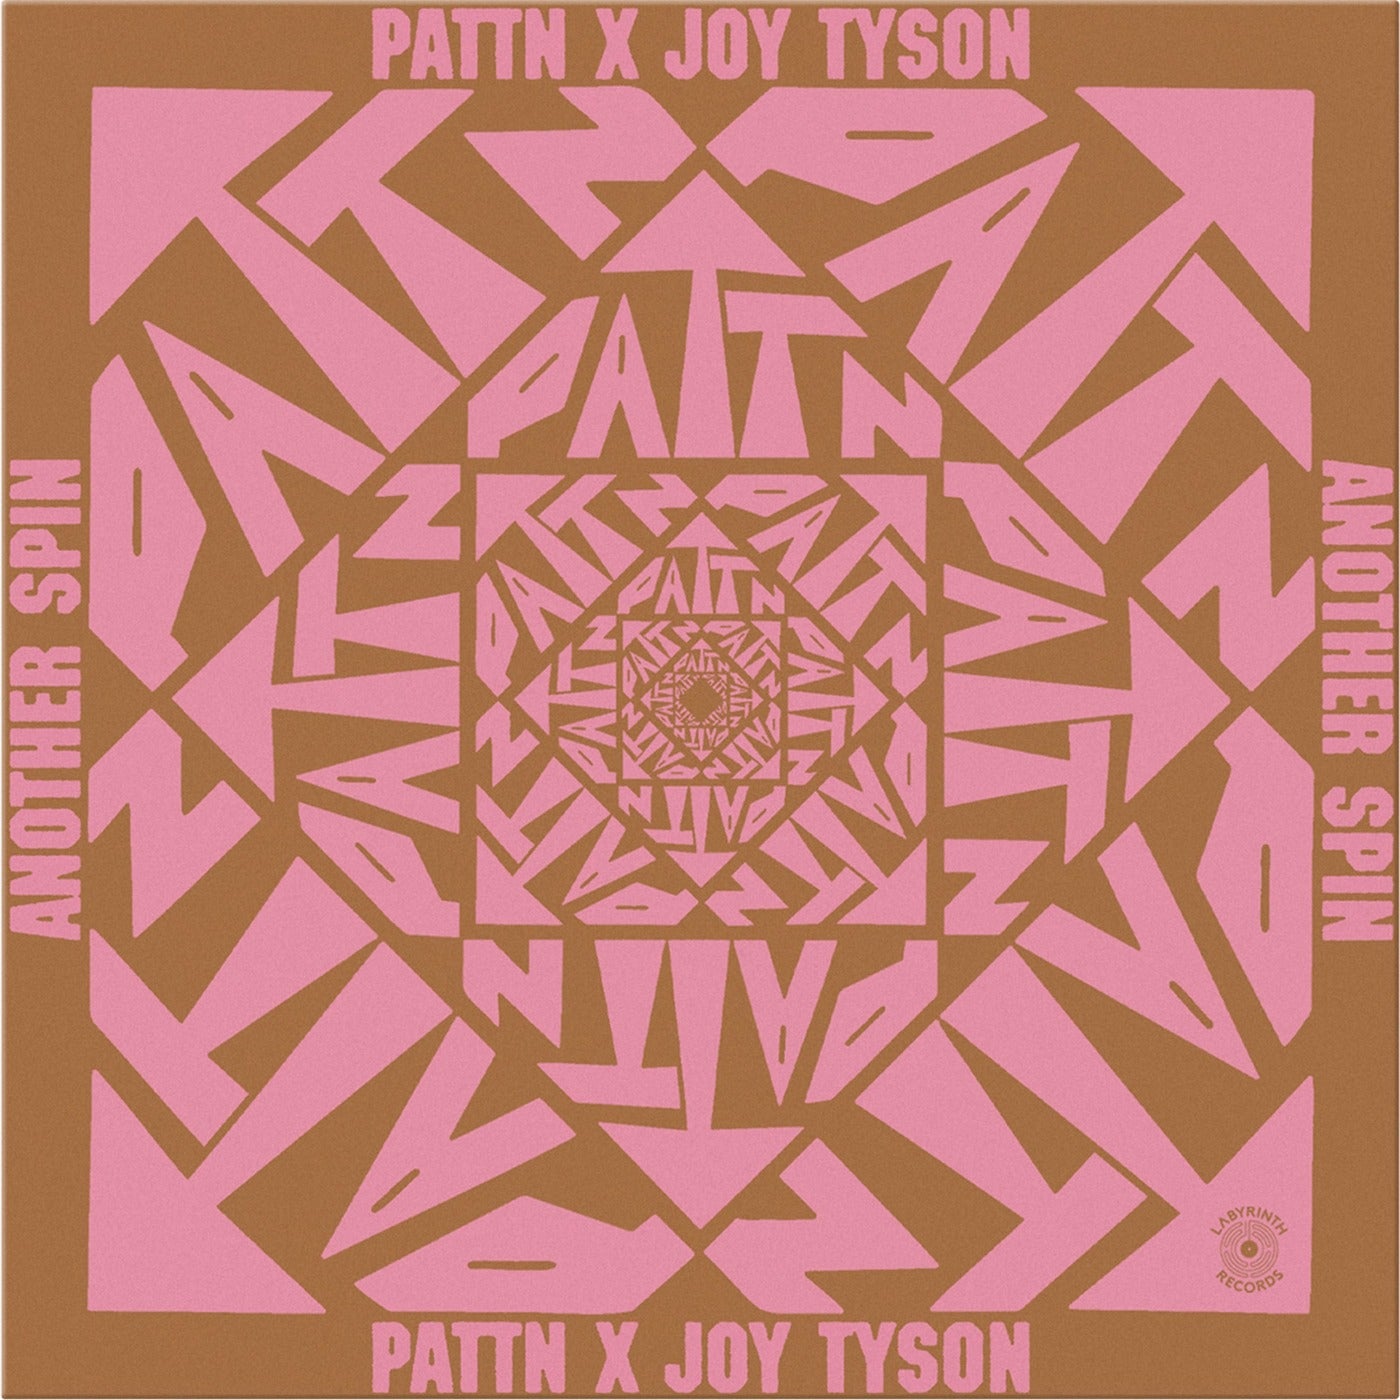 Another Spin (feat. Joy Tyson)